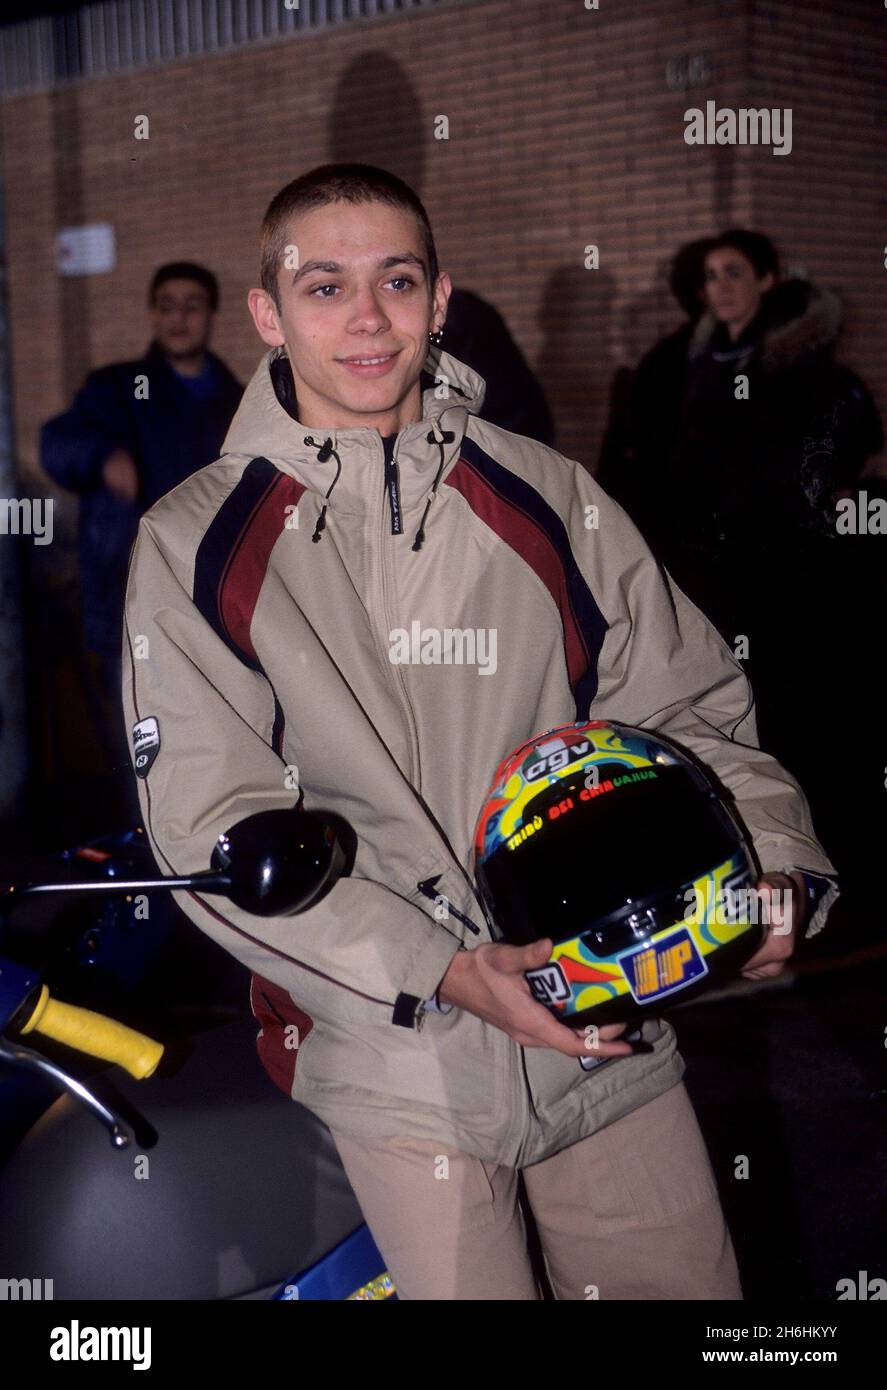 Mailand, Italien. November 2000. Milan, 90er Archiv auf dem Foto: Valentino  Rossi © fotostore Quelle: Independent Photo Agency/Alamy Live News  Stockfotografie - Alamy